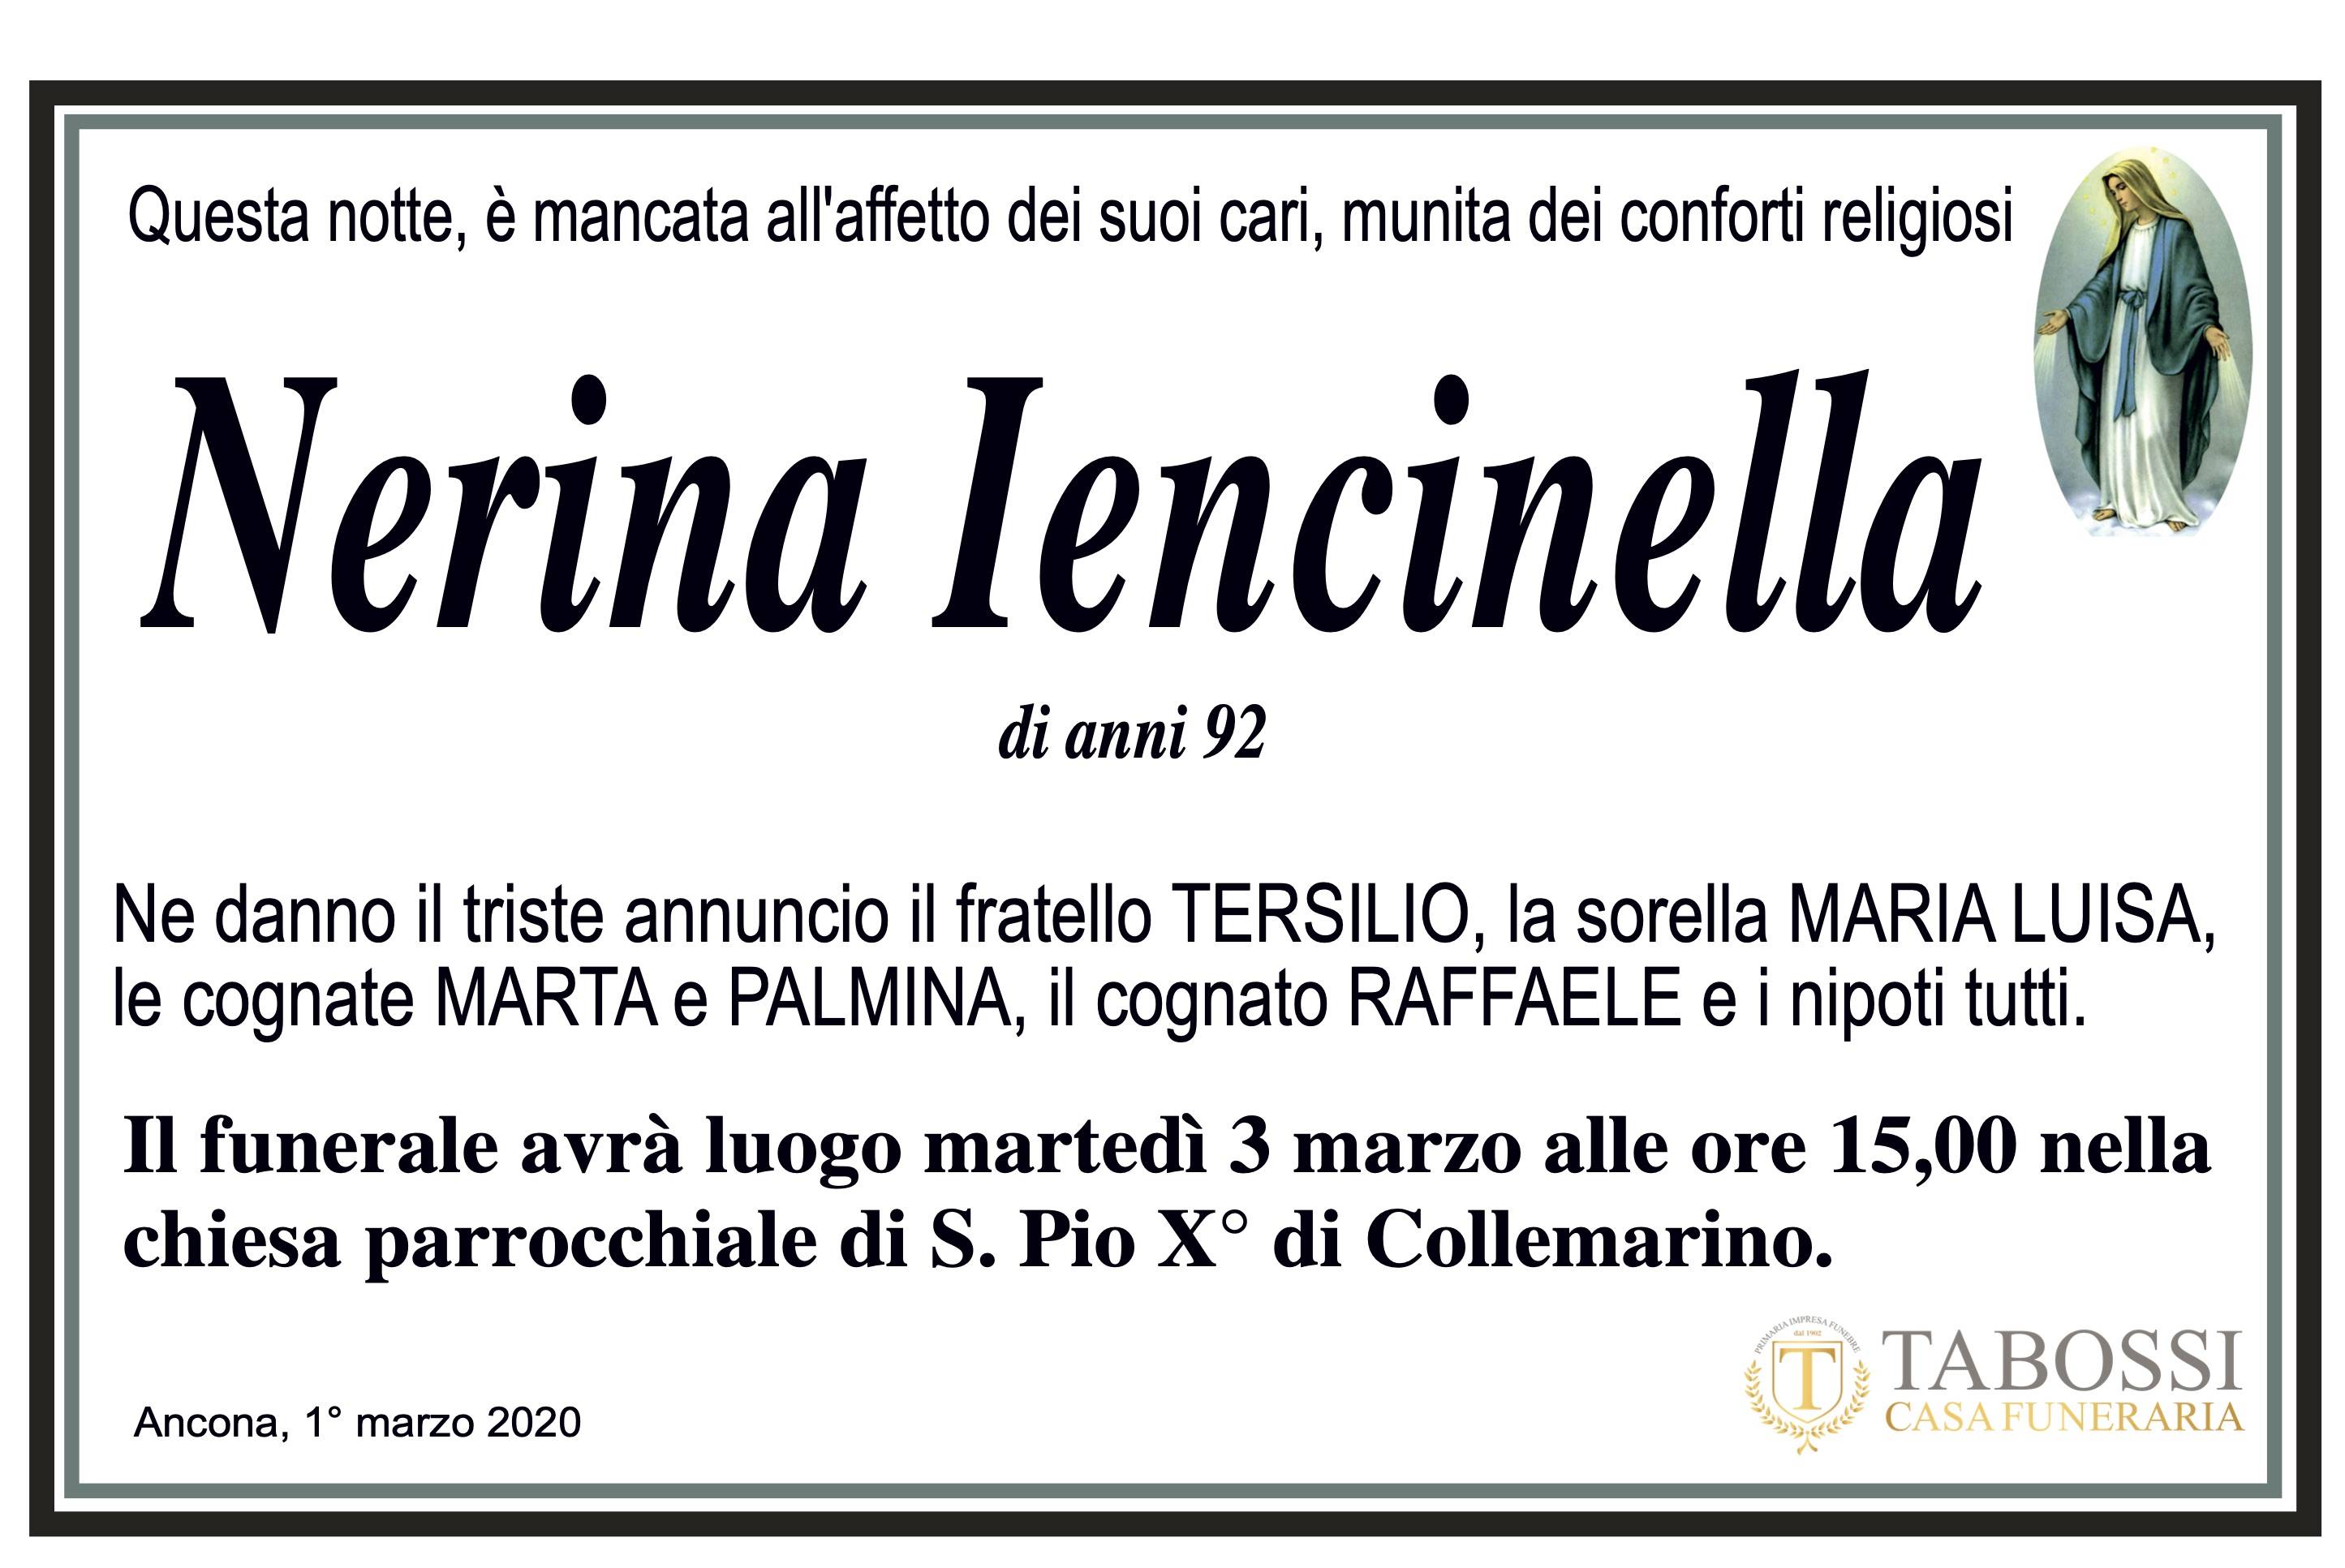 Nerina Iencinella